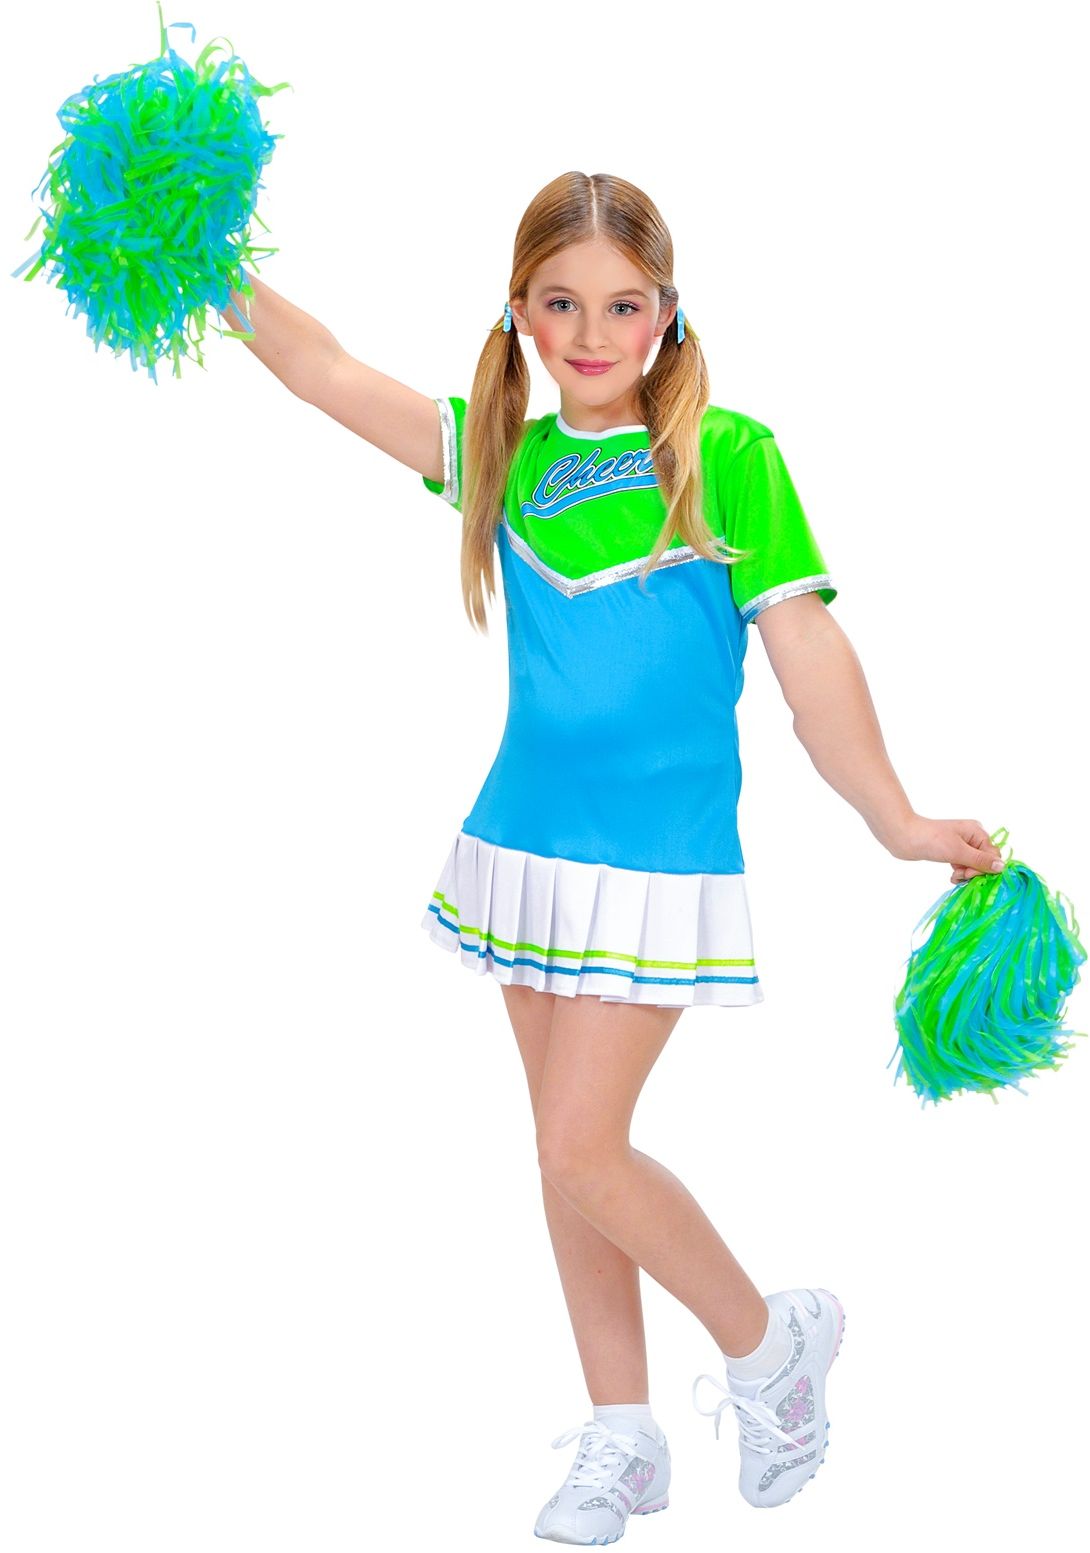 Cheerleader jurkje kind blauw groen